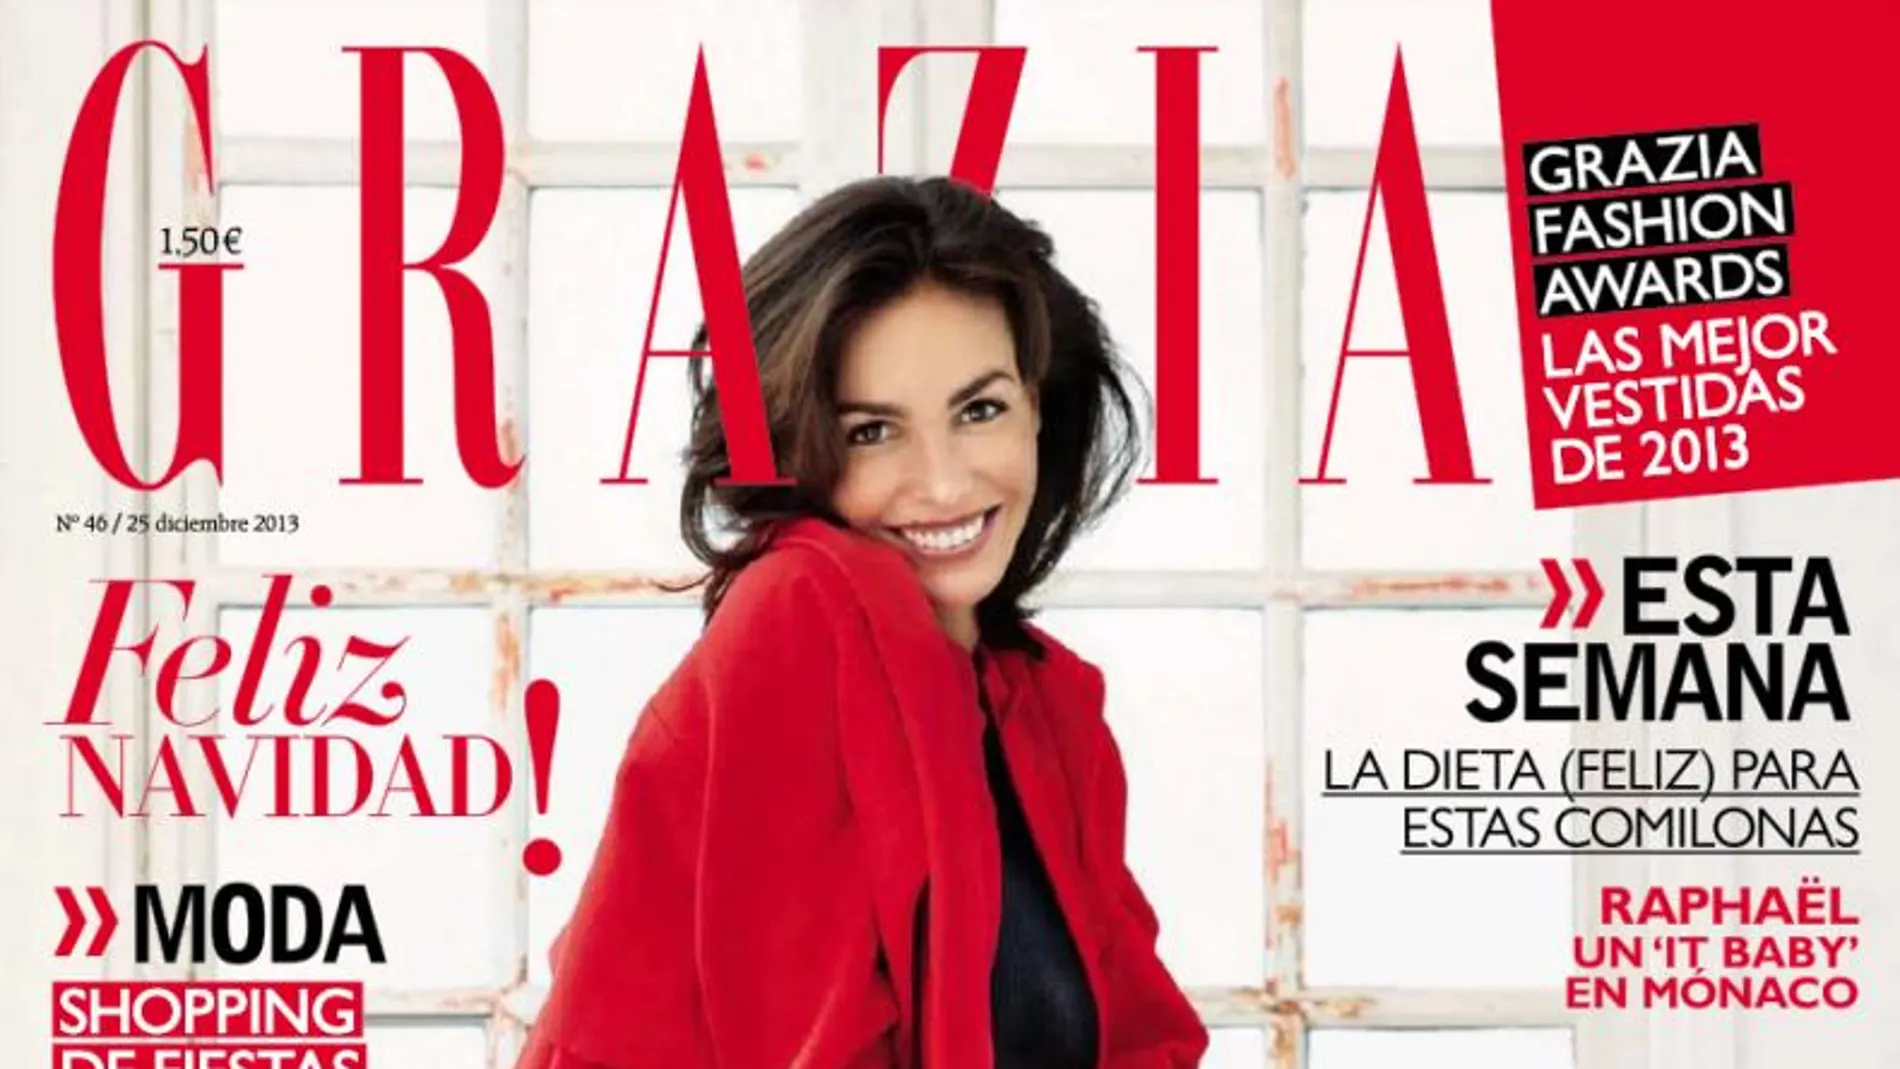 Esta semana Grazia, celebra la navidad con Inés Sastre en portada.